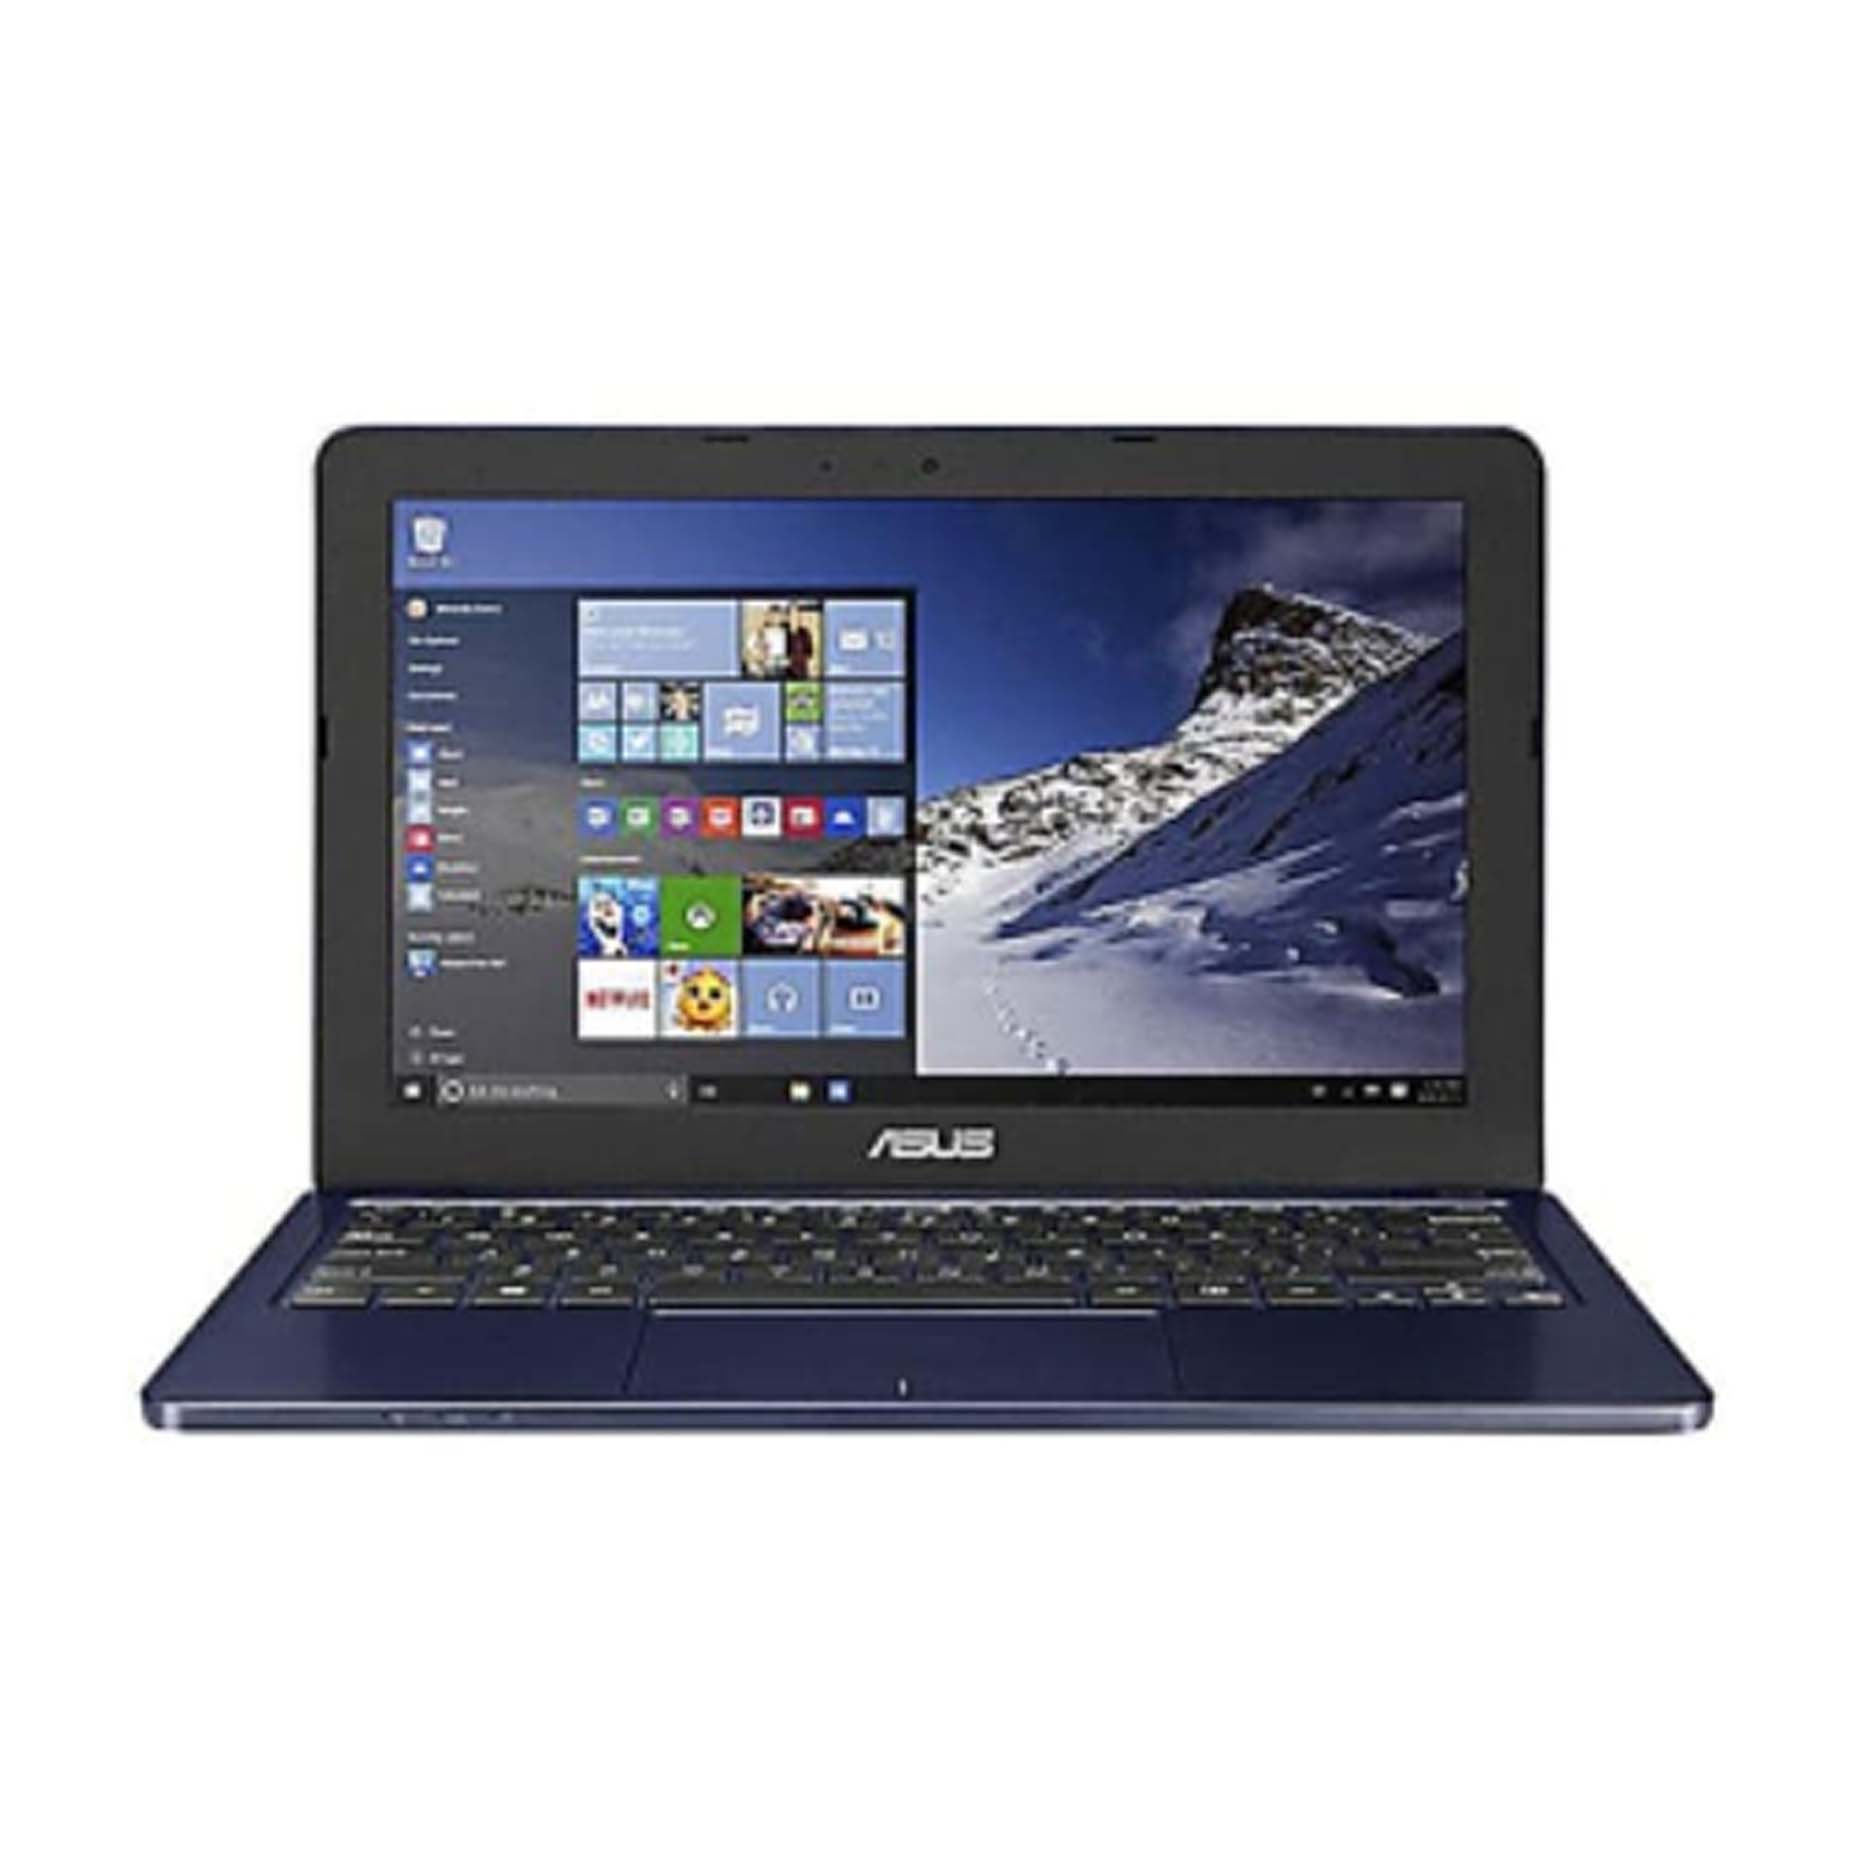 Harga Asus Notebook E203MAH-FD011T Star Grey Intel Celeron N4000 2GB 500GB 11.6 inch Win 10